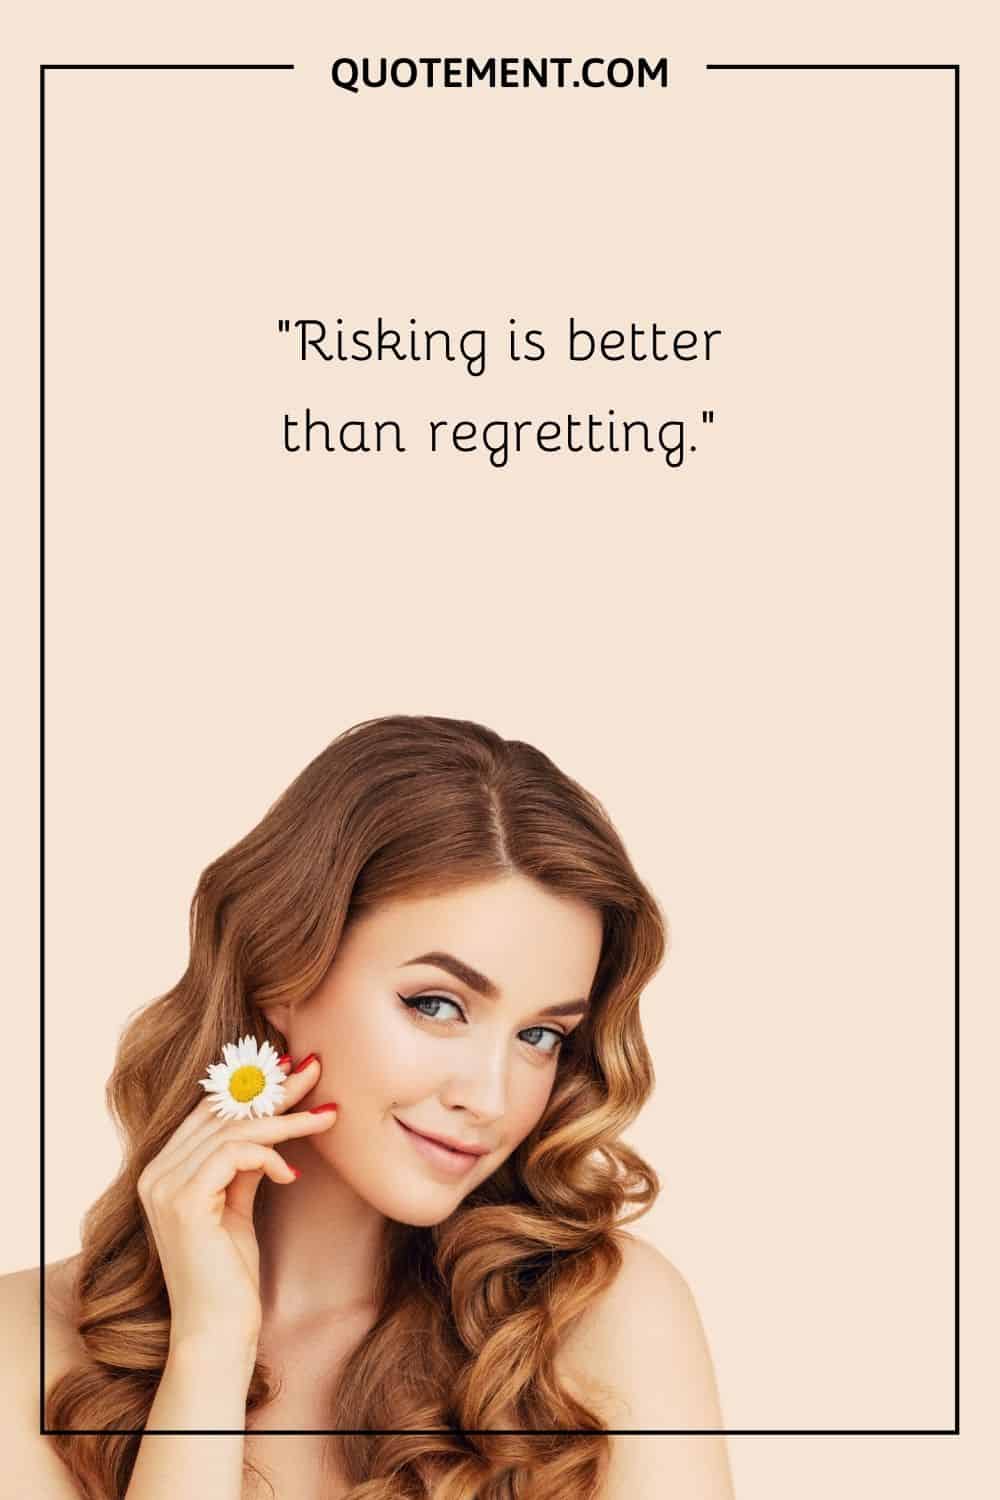 Risking is better than regretting.